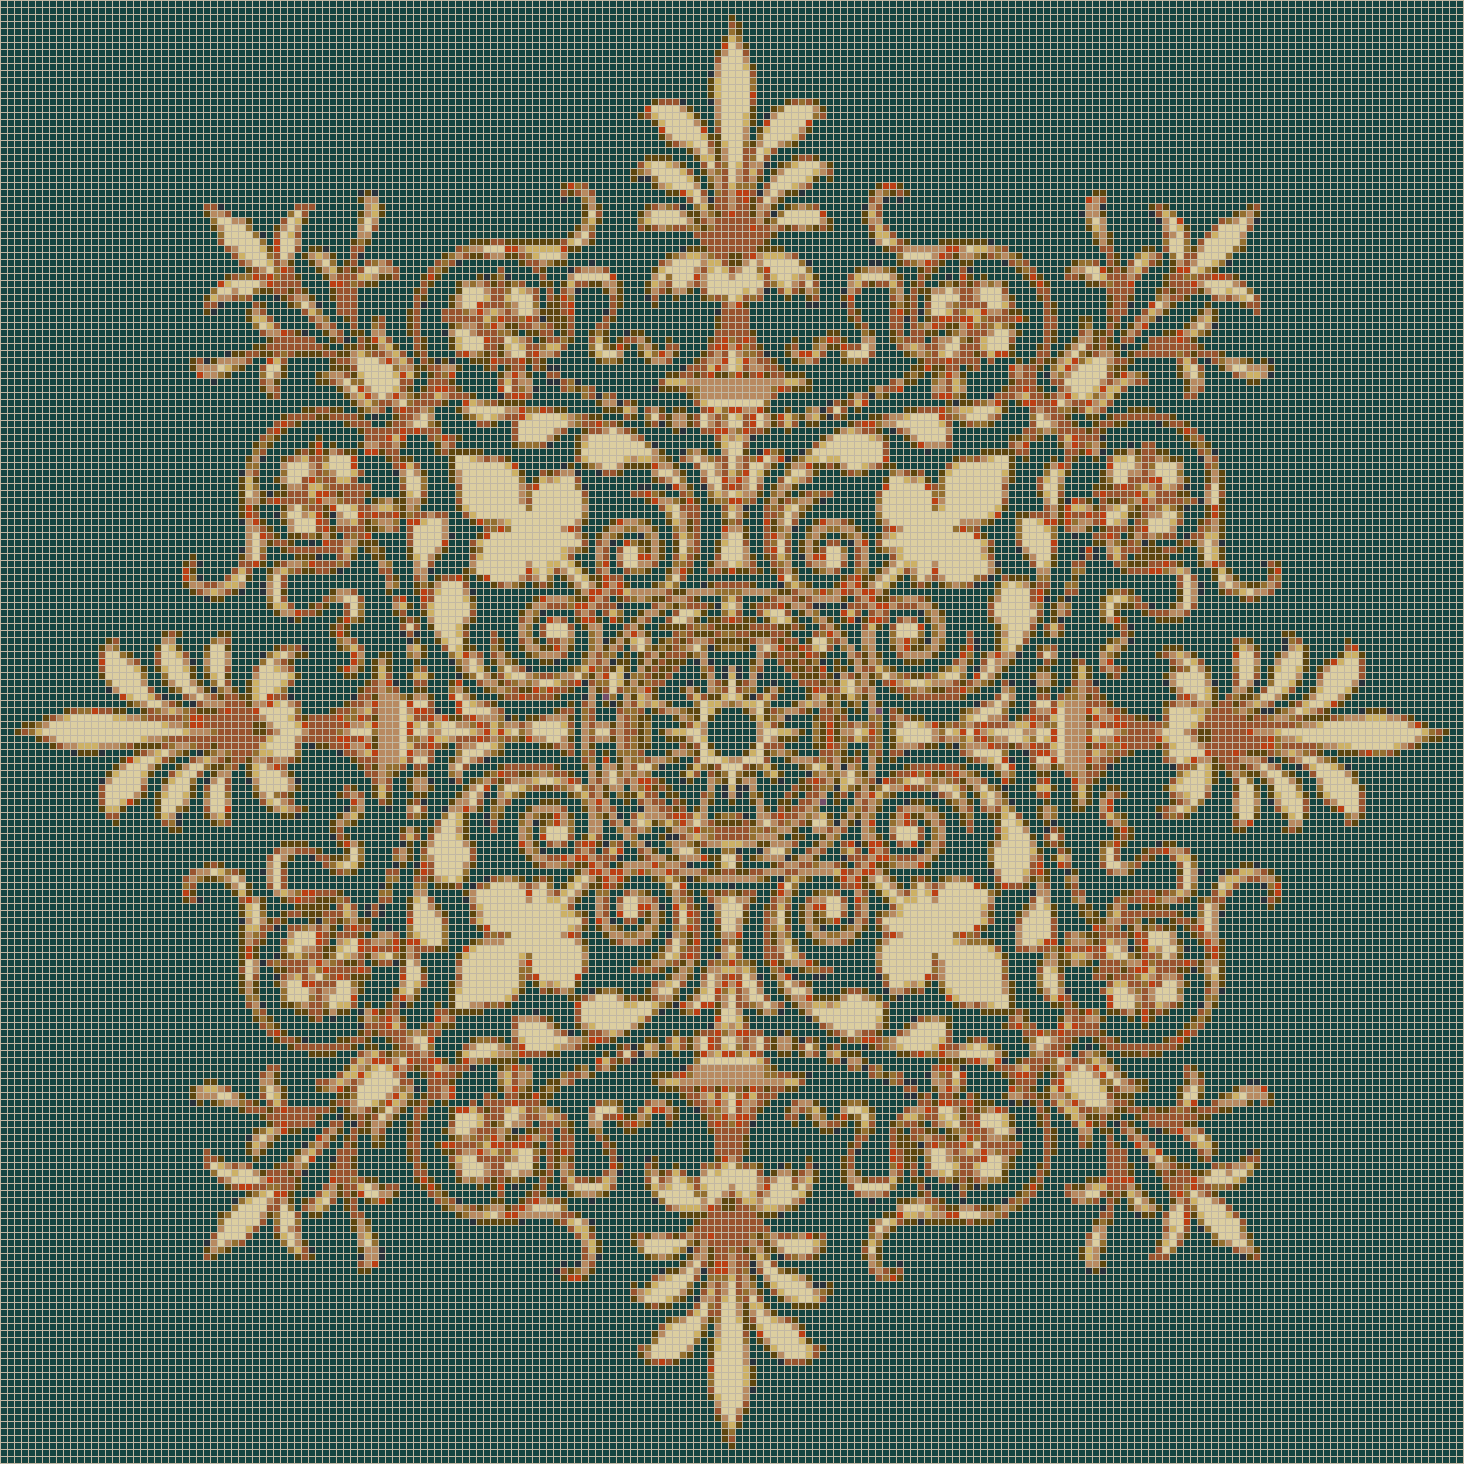 Victorian Ornament (Terra-Brown on D-Marine) - Mosaic Tile Picture Art